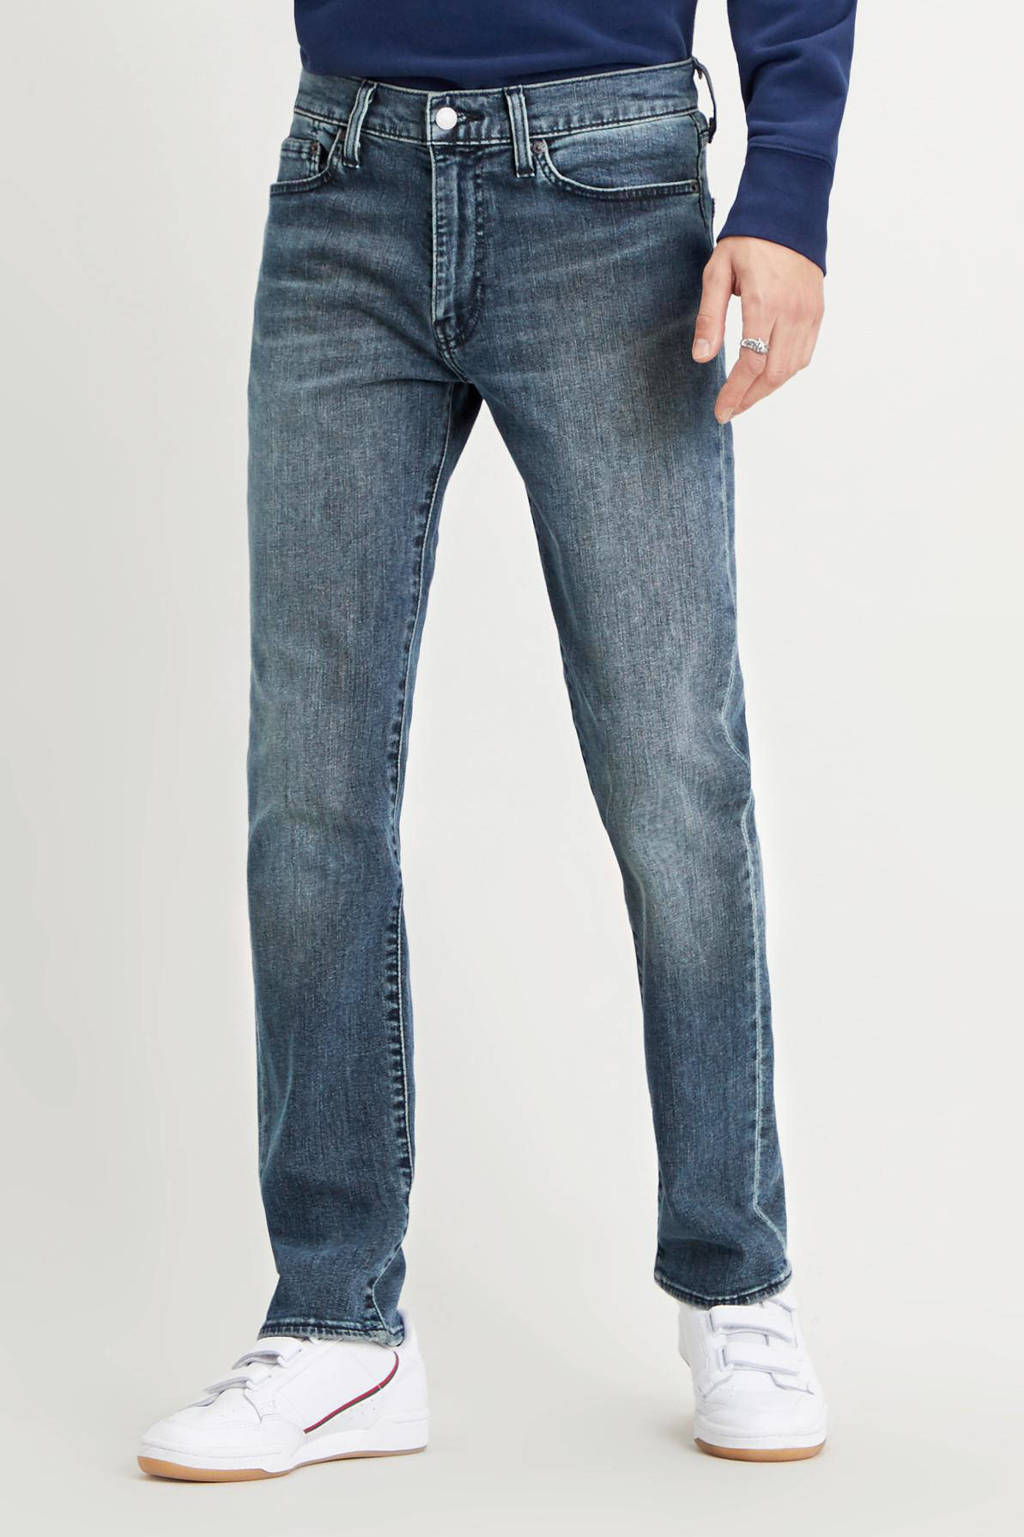 Levi's 511 slim fit jeans walter t2, Walter t2